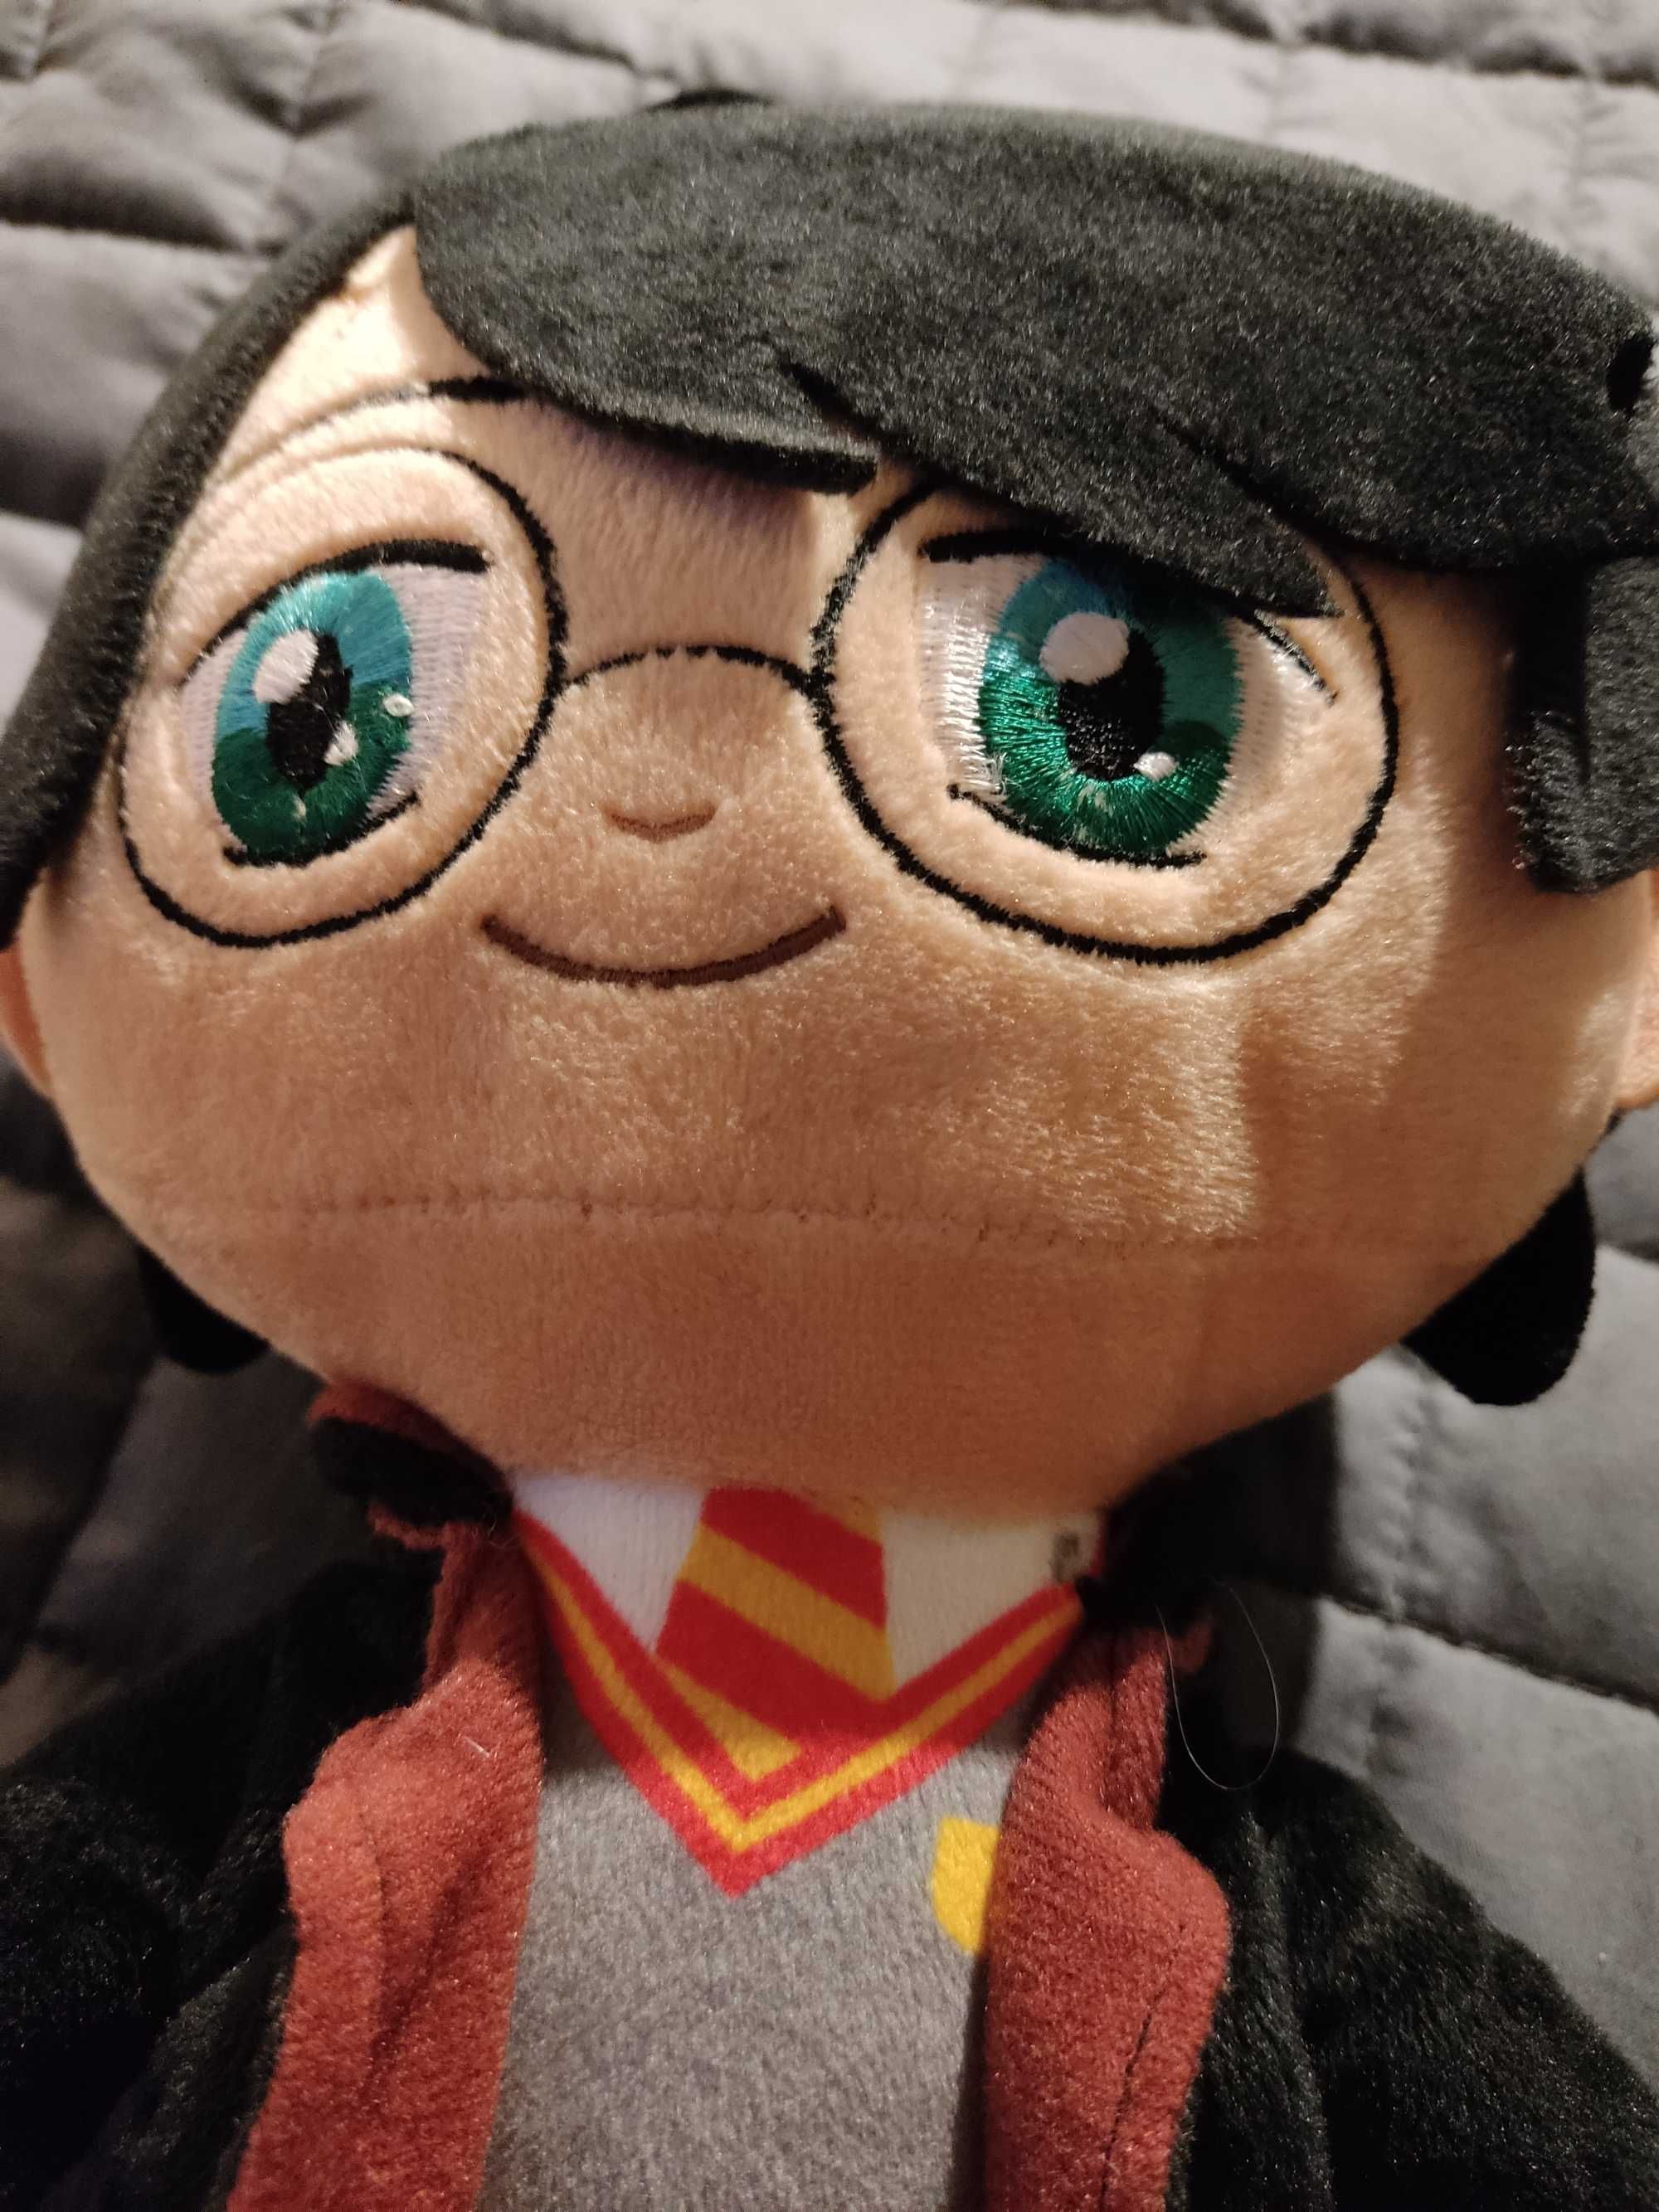 Harry Potter maskotka 30cm